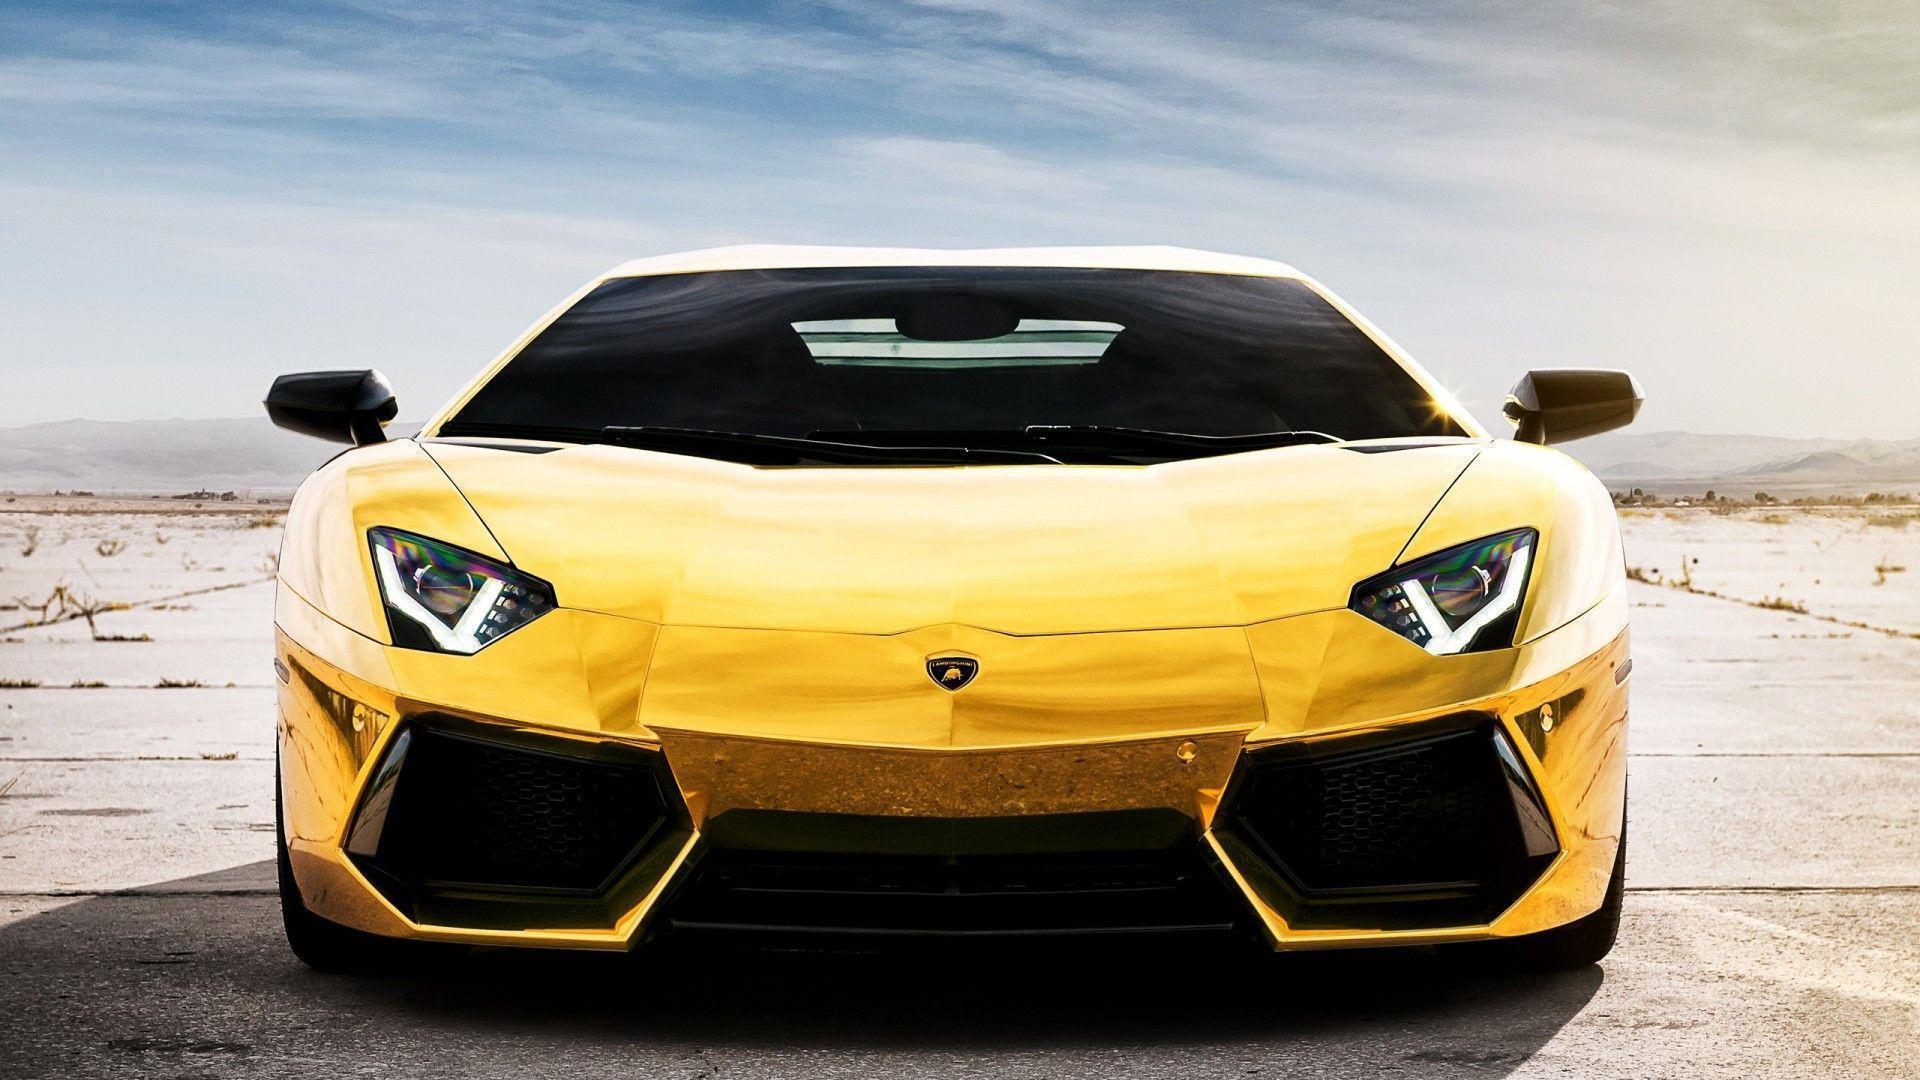 image For > Lamborghini Aventador Supercars